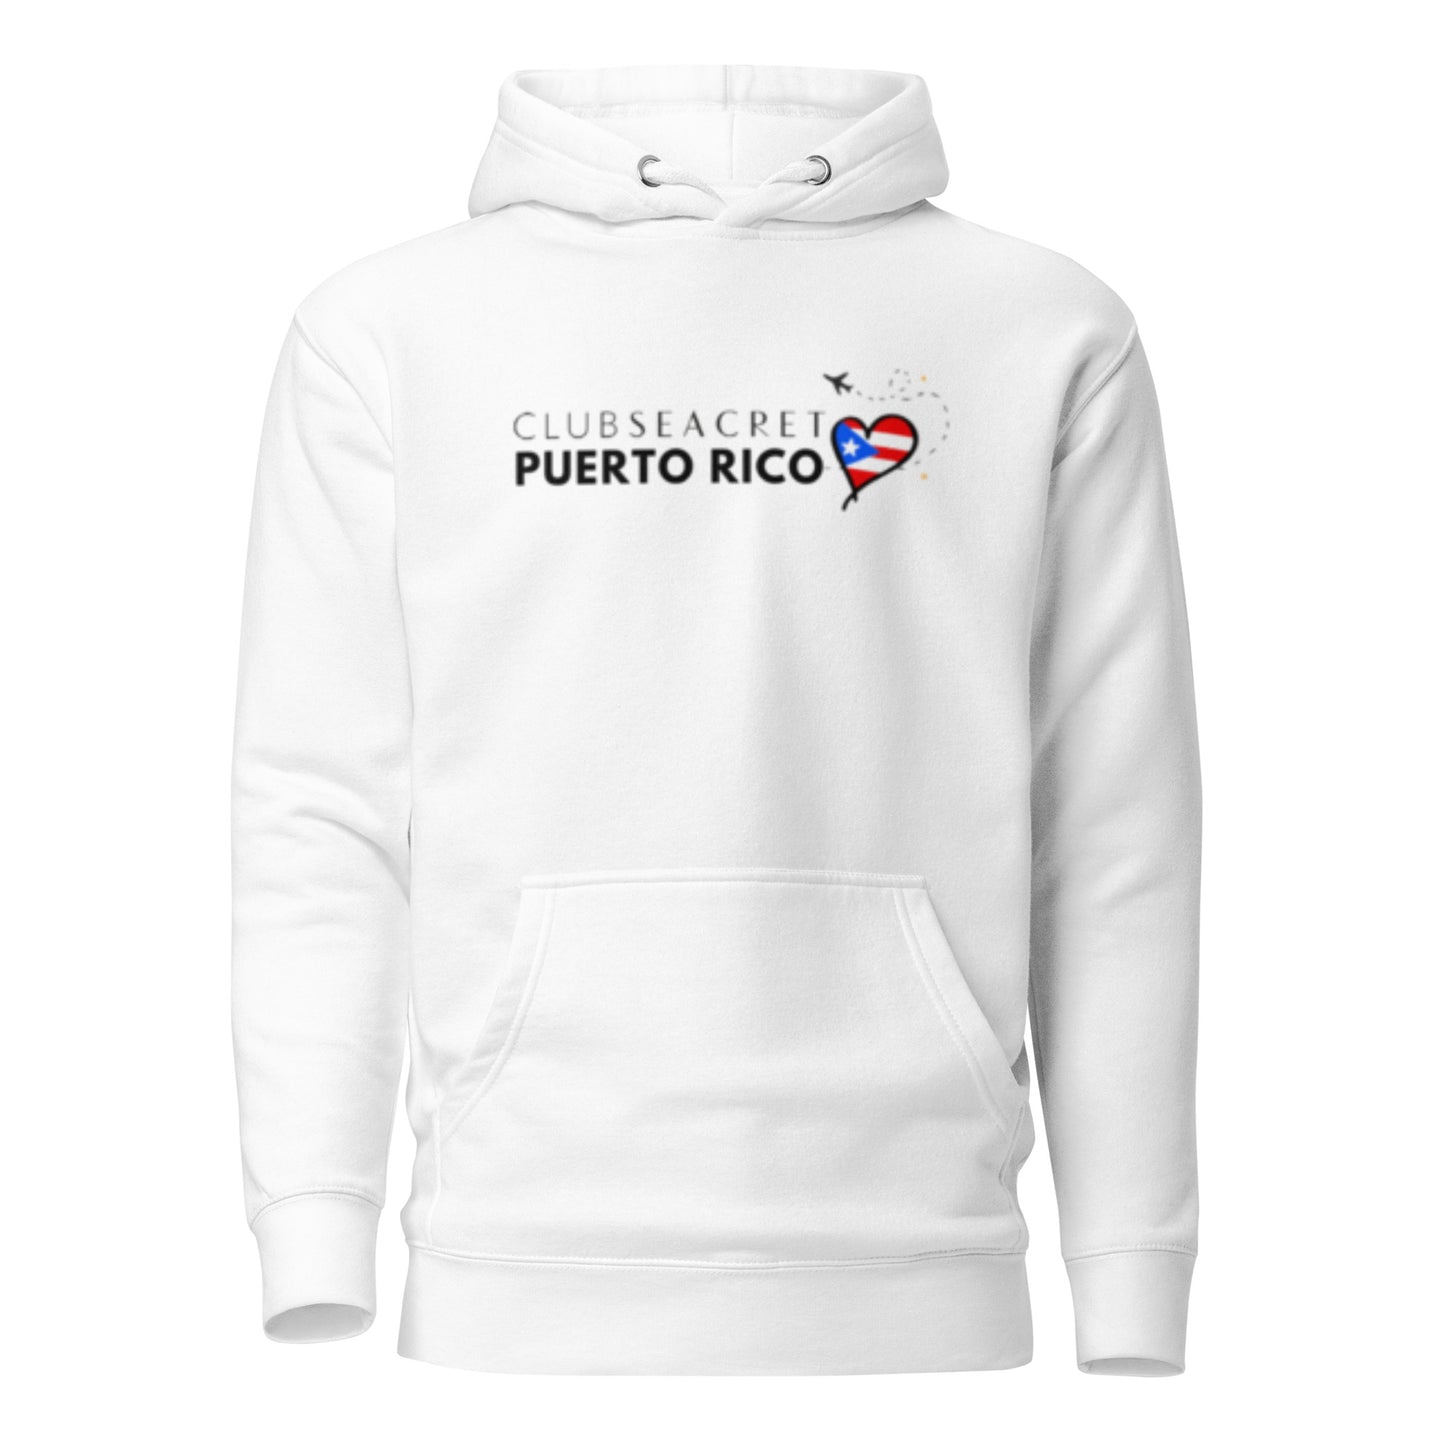 Club Seacret Puerto Rico - Sudadera con capucha unisex